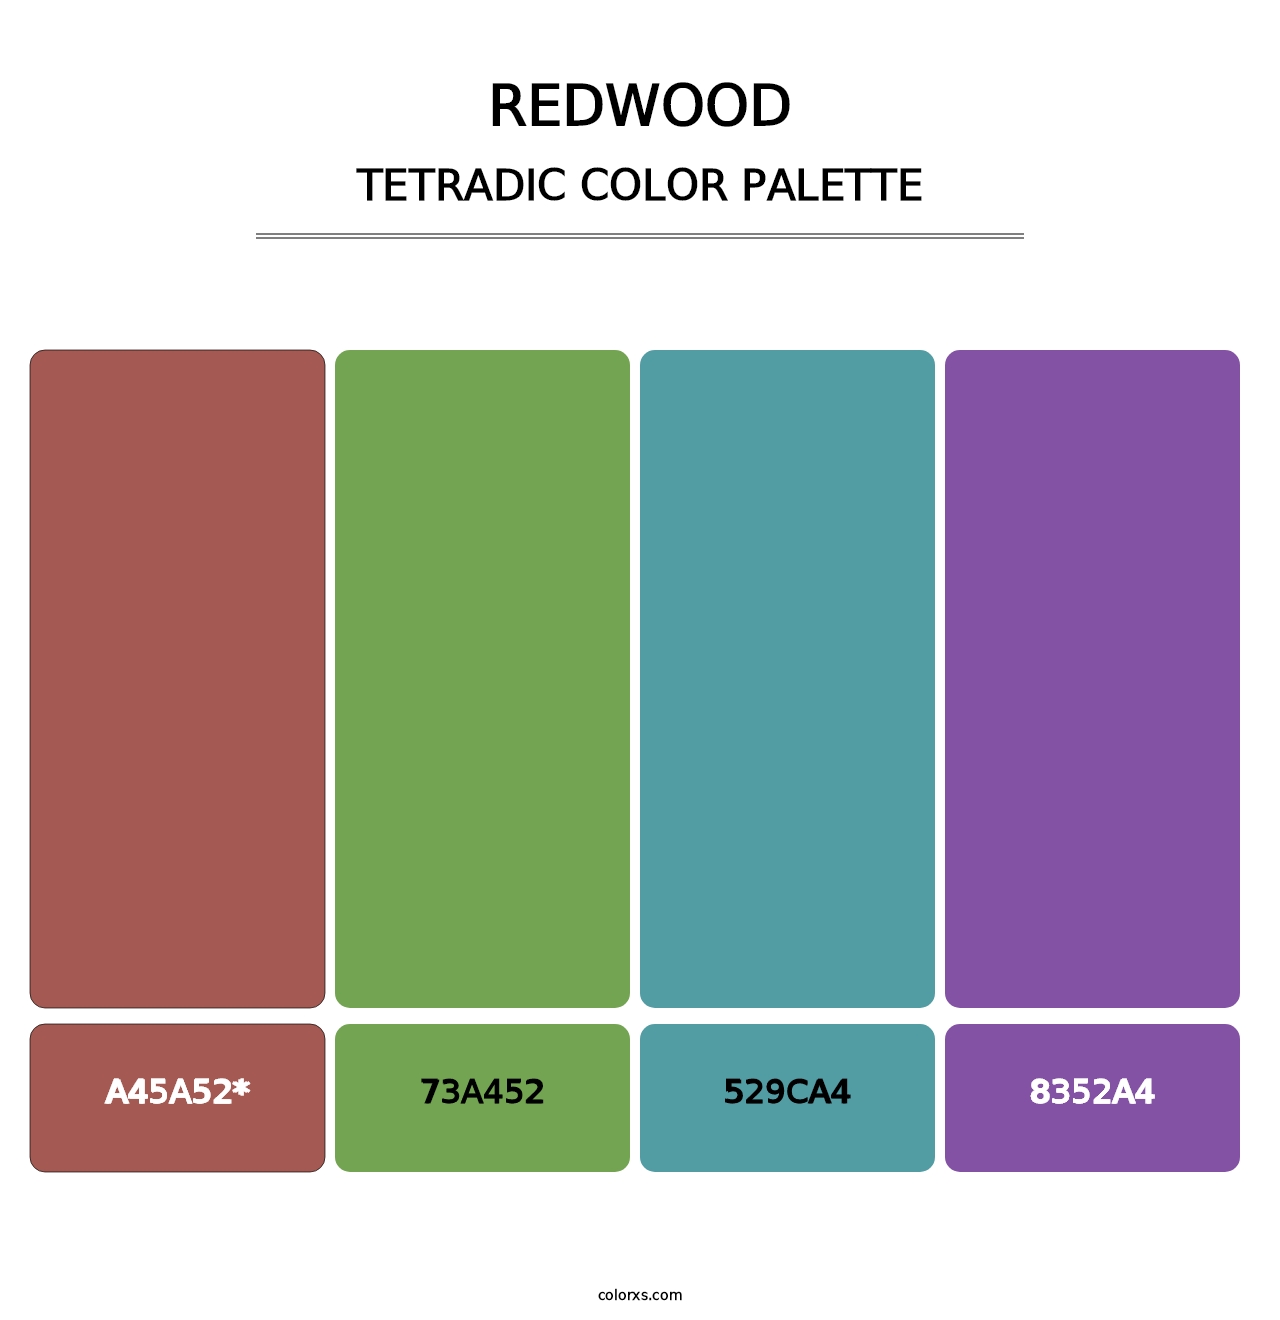 Redwood - Tetradic Color Palette